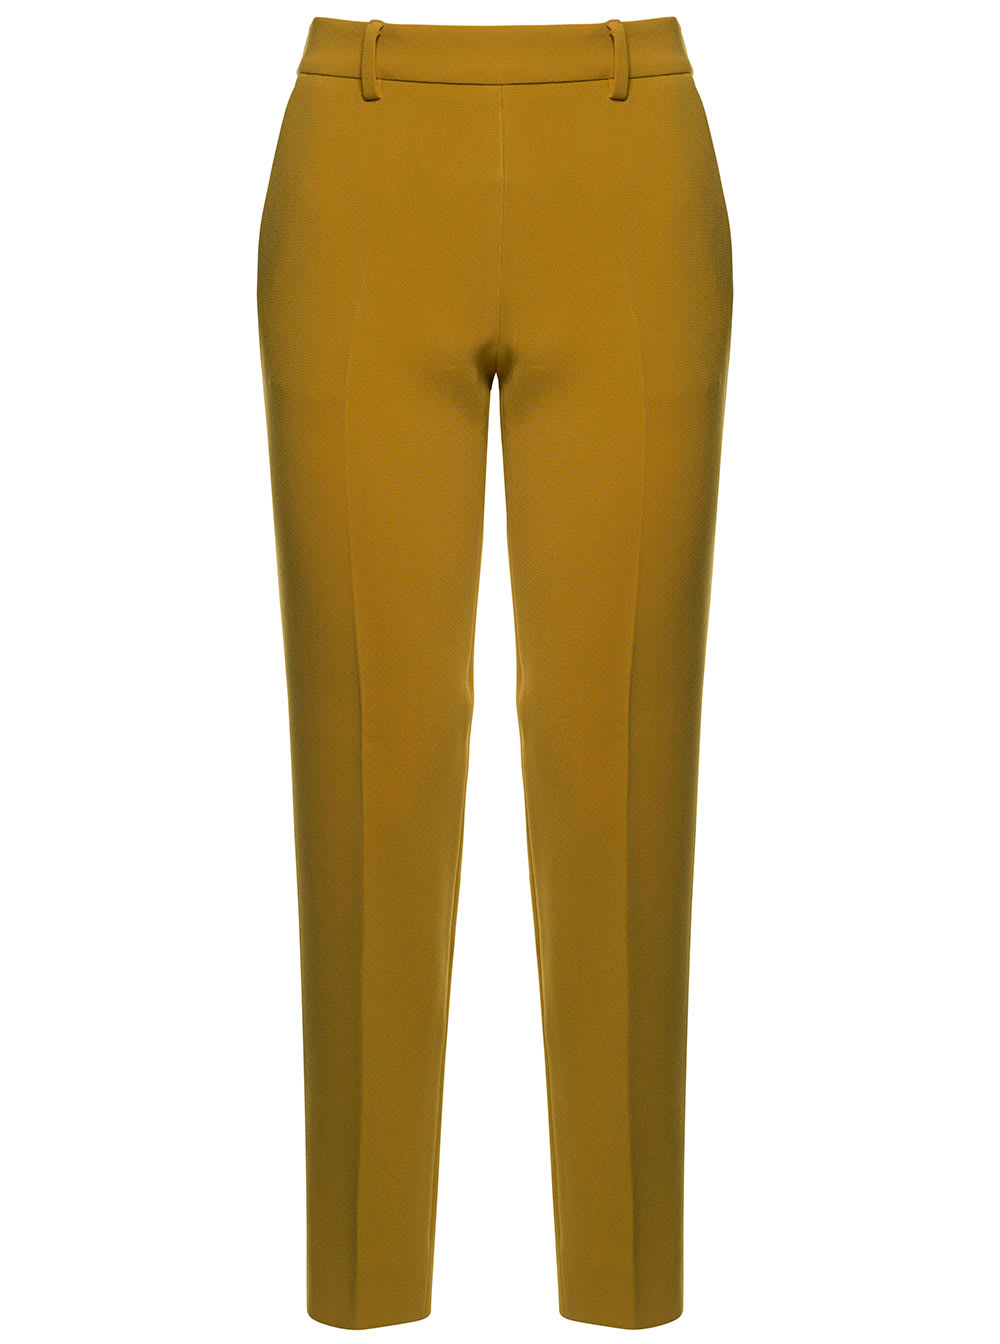 Alberto Biani Woman Mustard Colored Triacetate Trousers